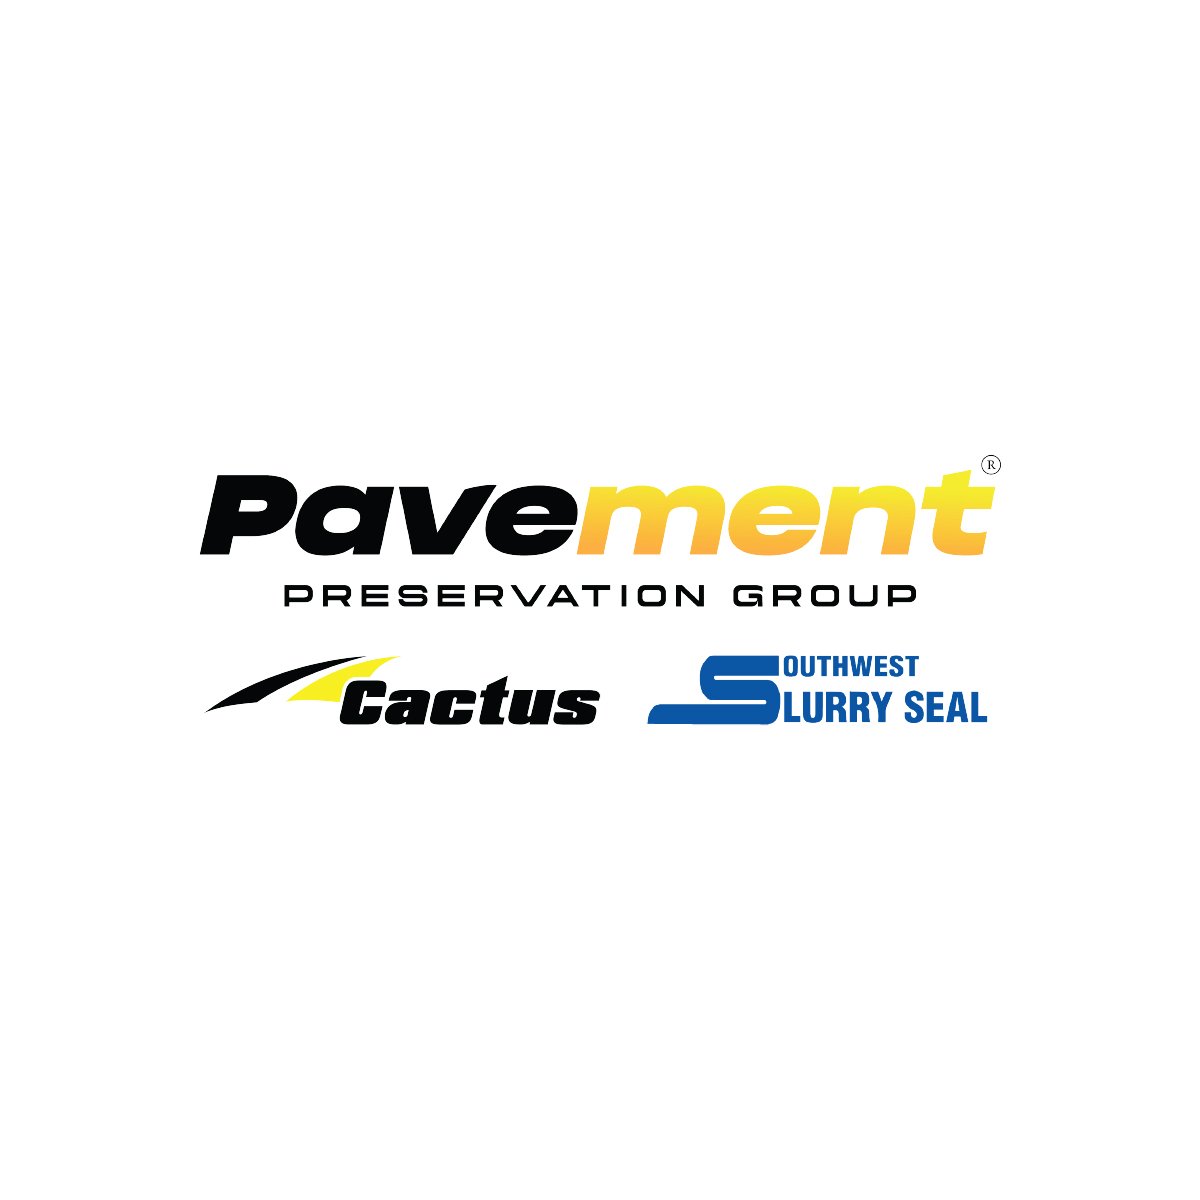 Pavement Preservation Group logo.jpg